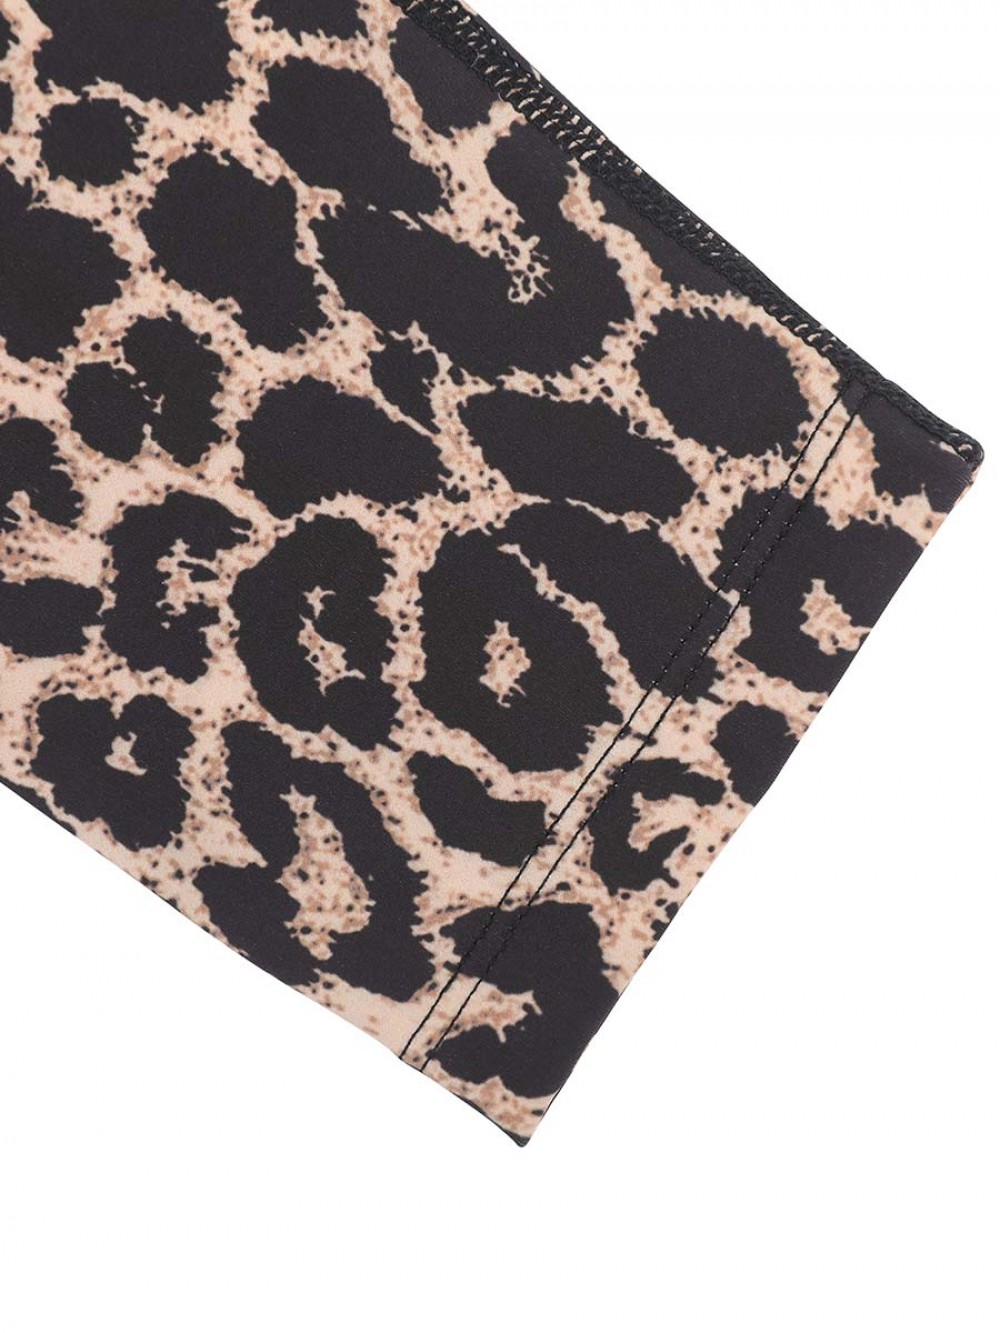 2022 New Arrivals Leopard Print Splicing High Elasticity High Waist Yoga Pants Leggings